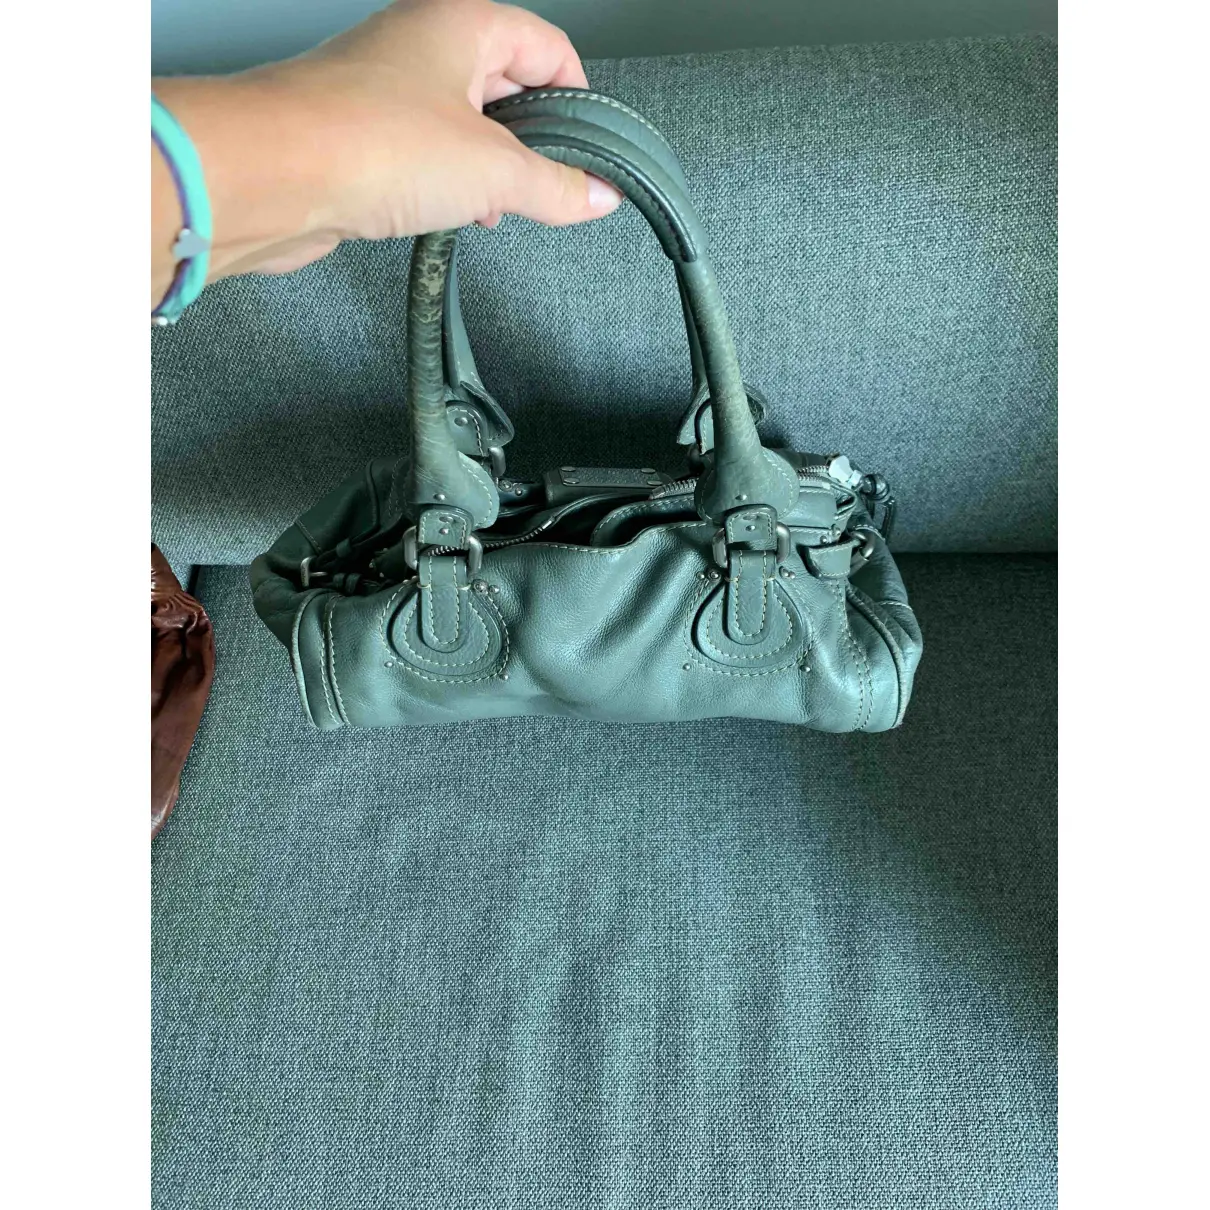 Buy Chloé Paddington leather handbag online